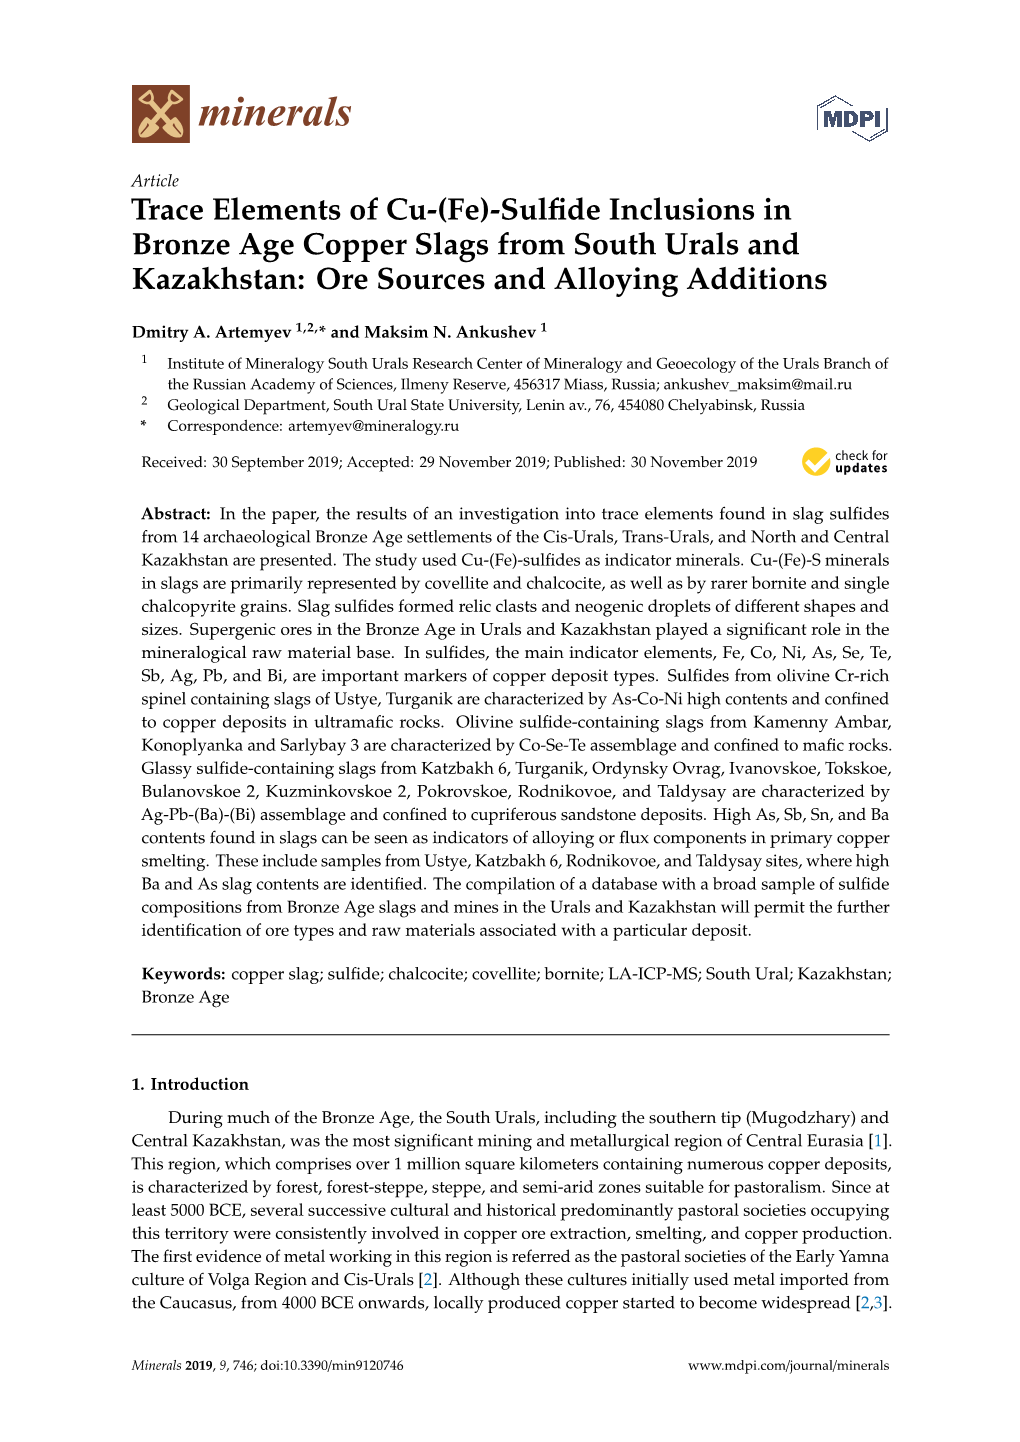 Trace Elements of Cu-(Fe)-Sulfide Inclusions in Bronze Age Copper